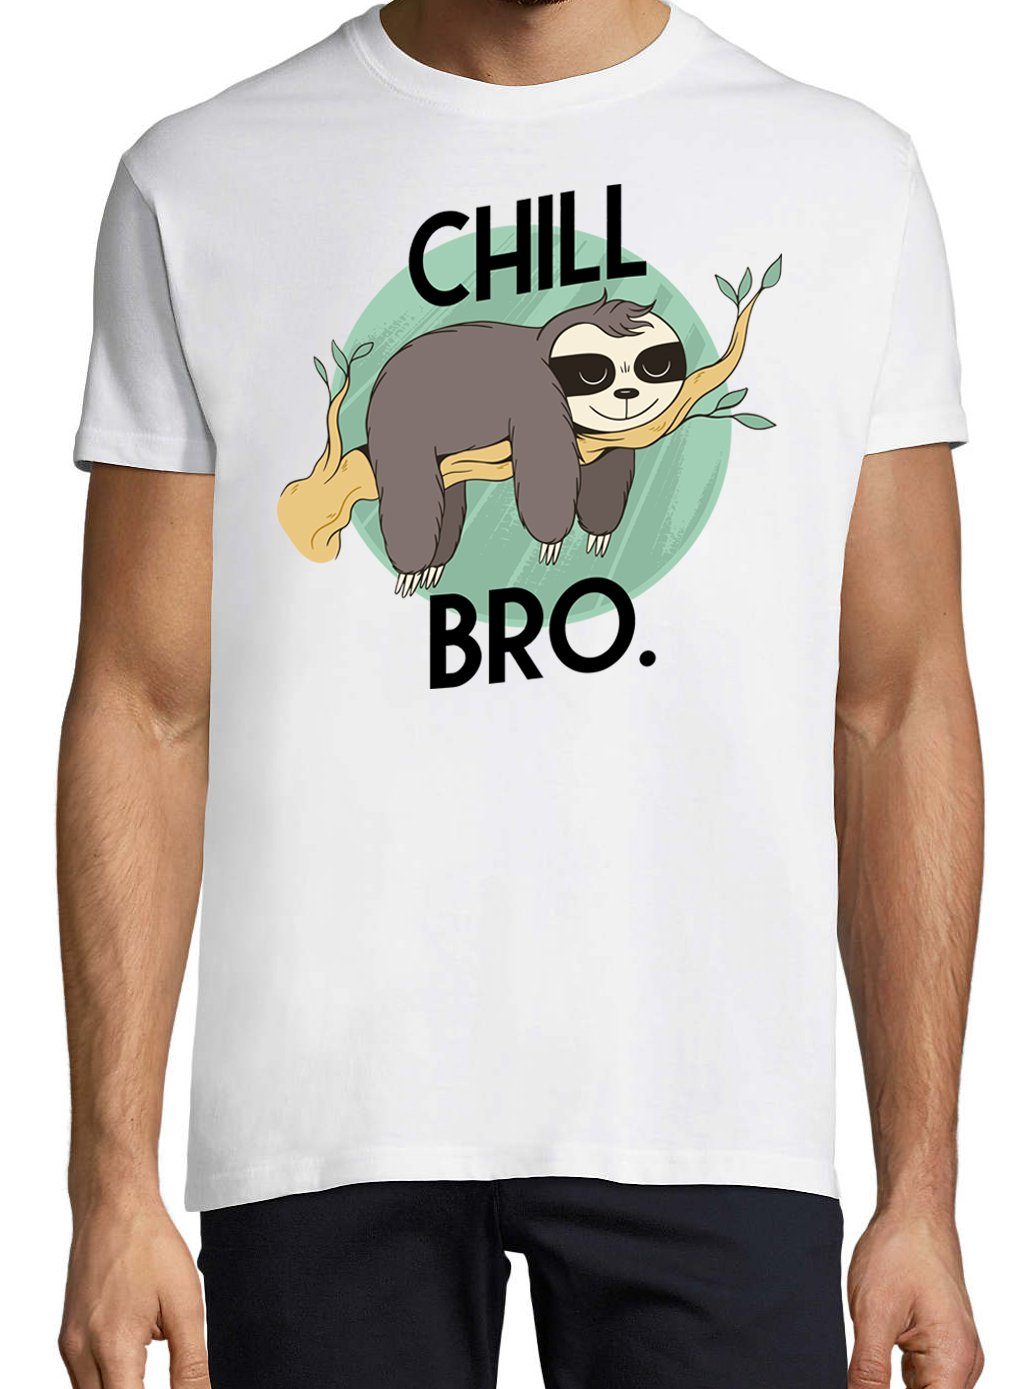 Faultier Frontprint T-Shirt mit Bro Herren Youth trendigem Chill Shirt Designz Weiß